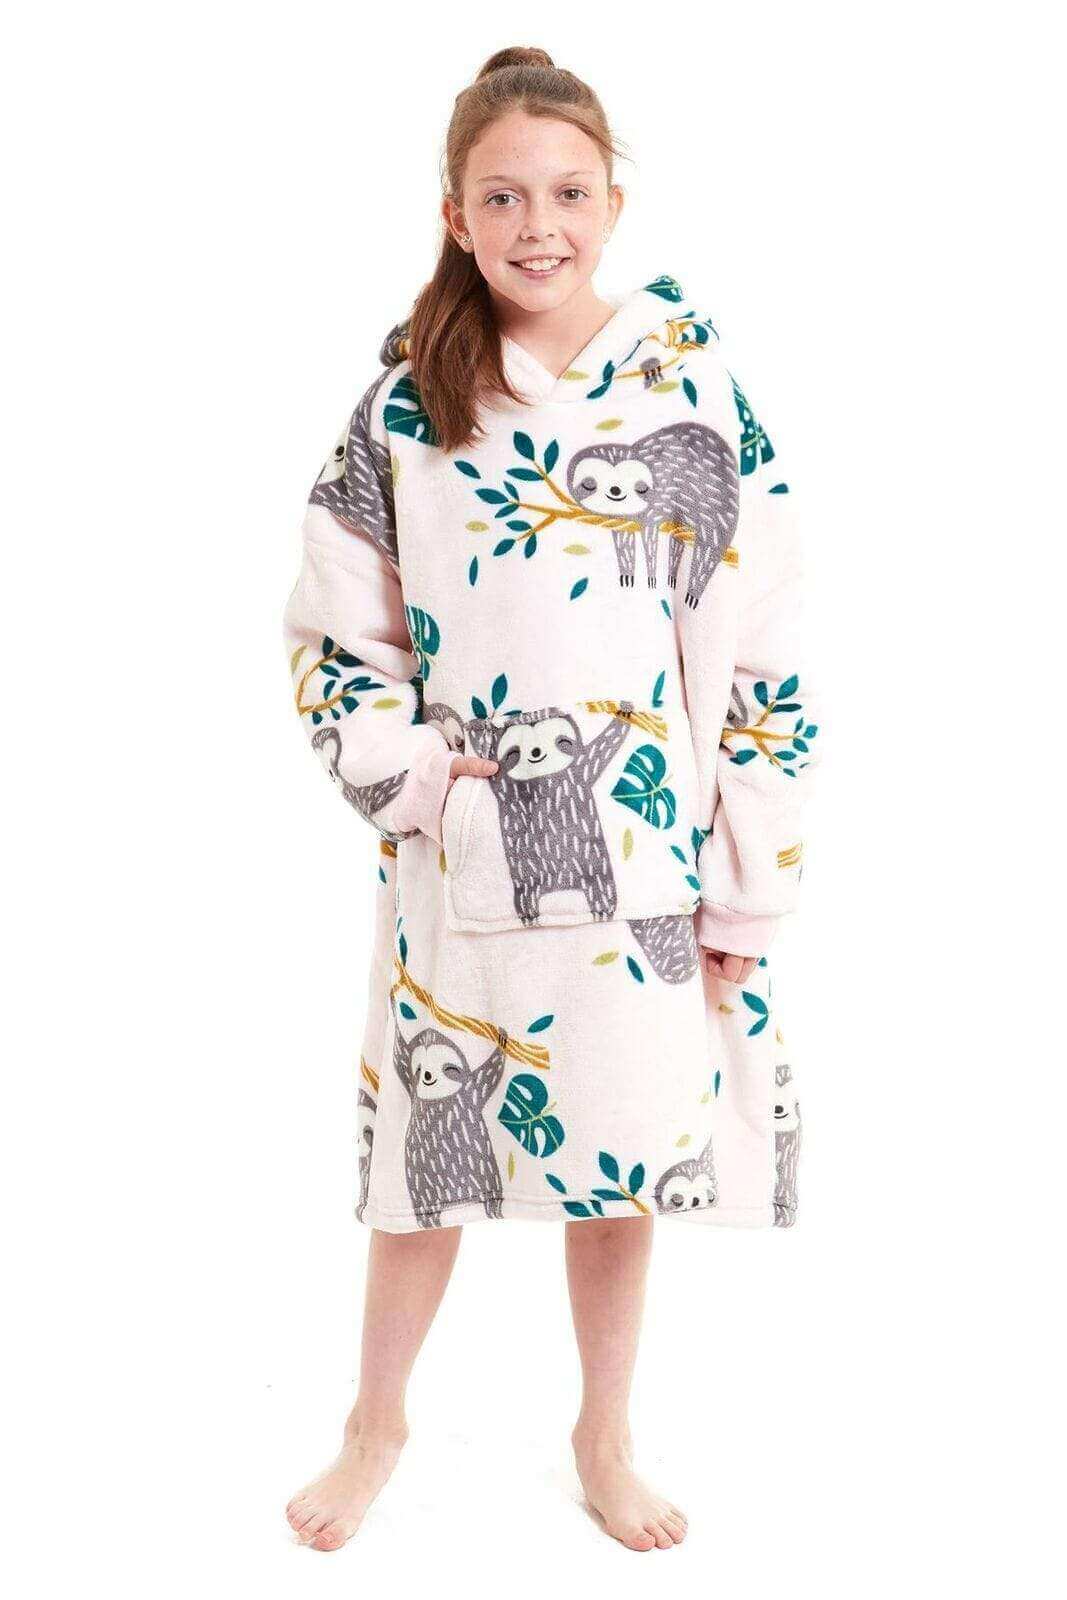 Kids Oversized Hooded Plush Fleece Blankets With Reversible Sherpa. Buy now for £15.00. A Hooded Blanket by Daisy Dreamer. blush pink, charcoal, childrens, clothing, dusky pink, flannel, fleece, grey, hooded blanket, hot pink, kids, loungewear, nightwear,